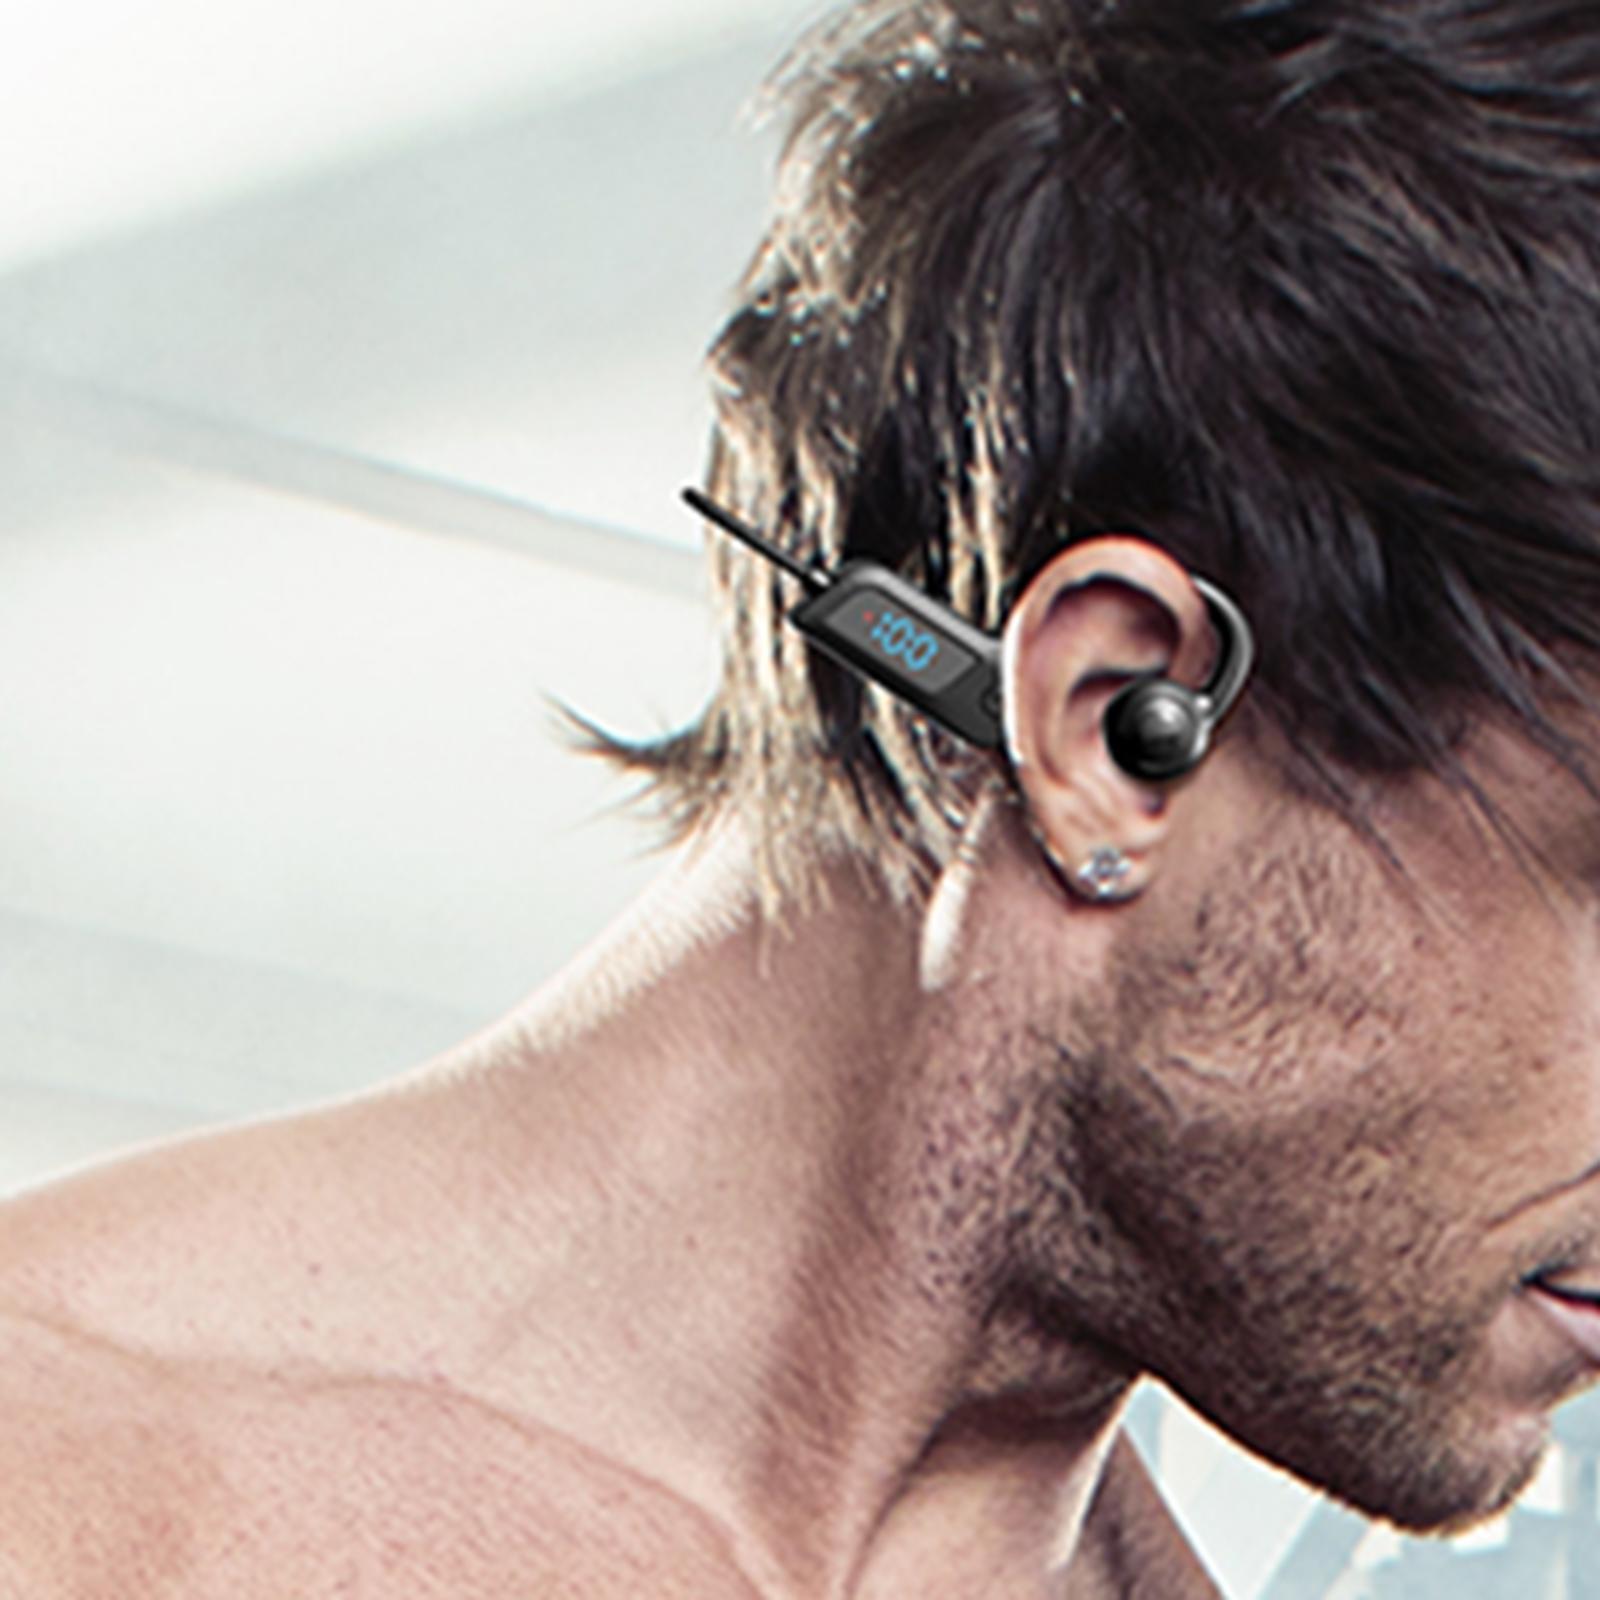 Open Ear Headphones 5.3 Compact Wireless Sports Headset for Running